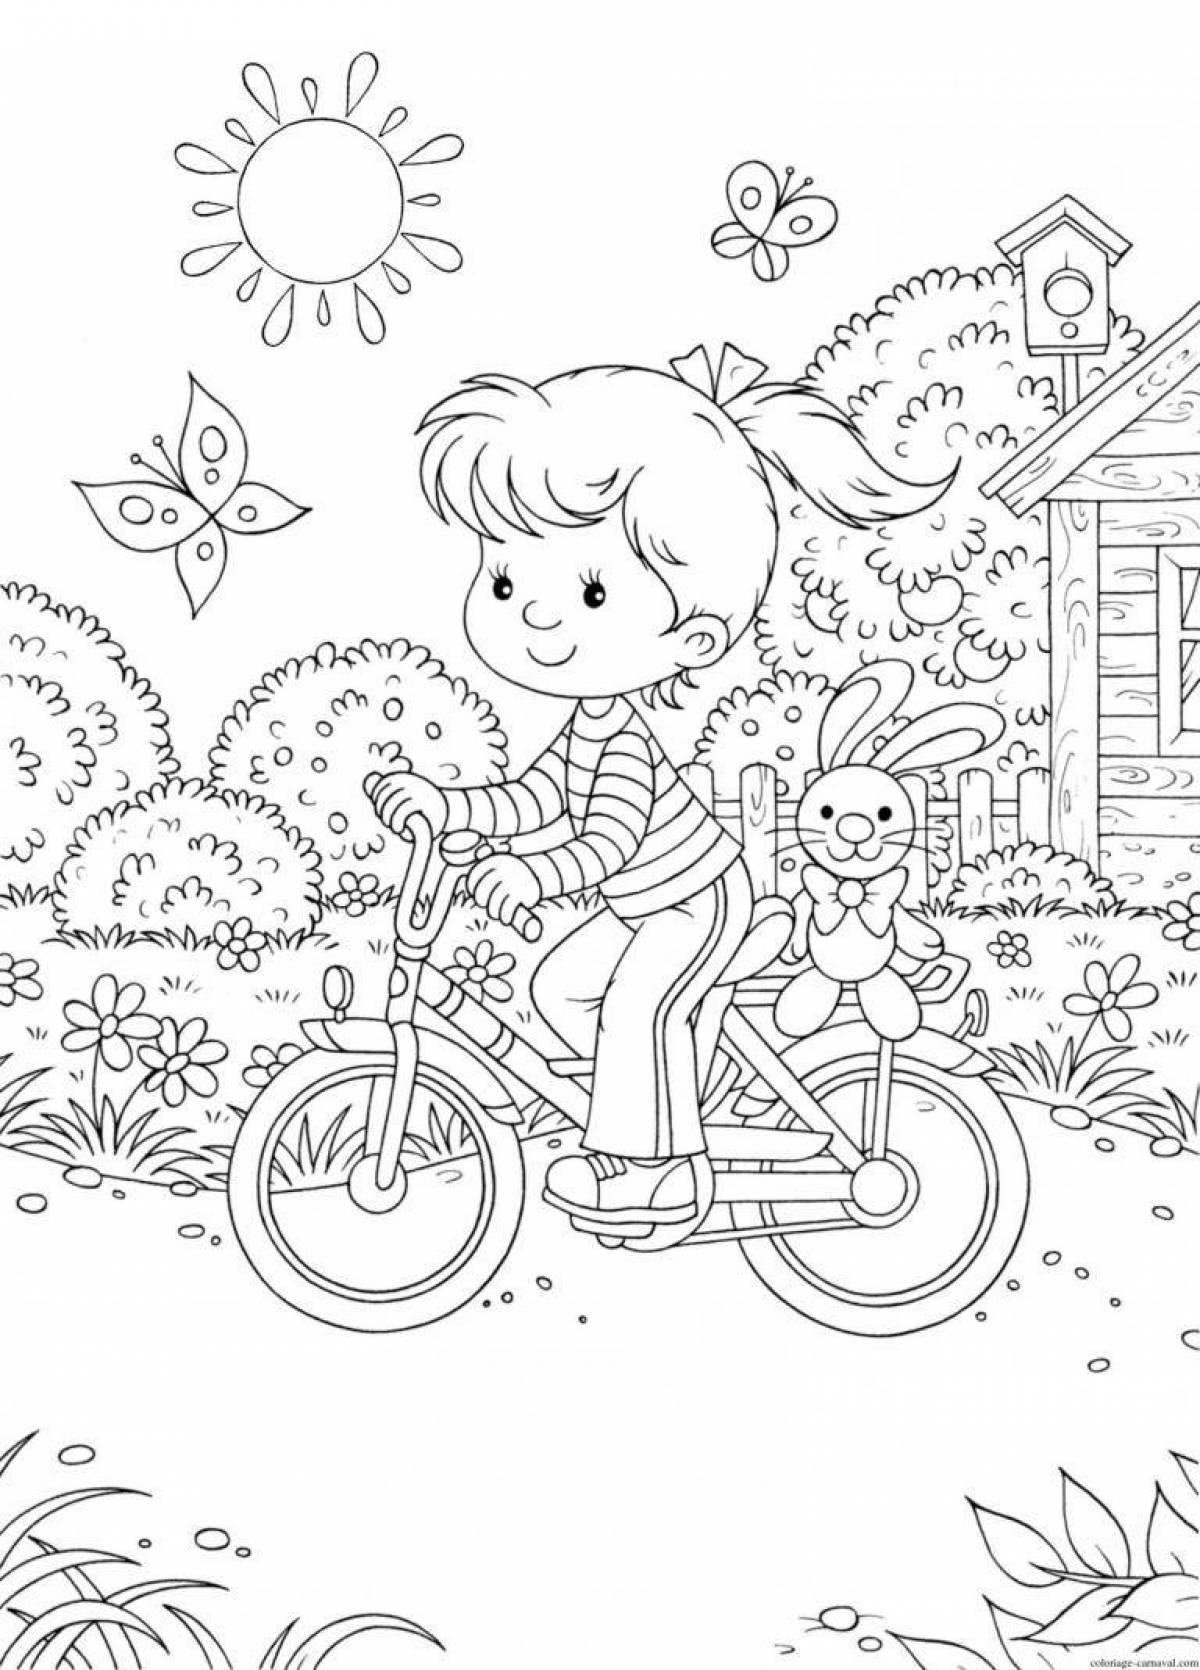 Bubble girl on a bike